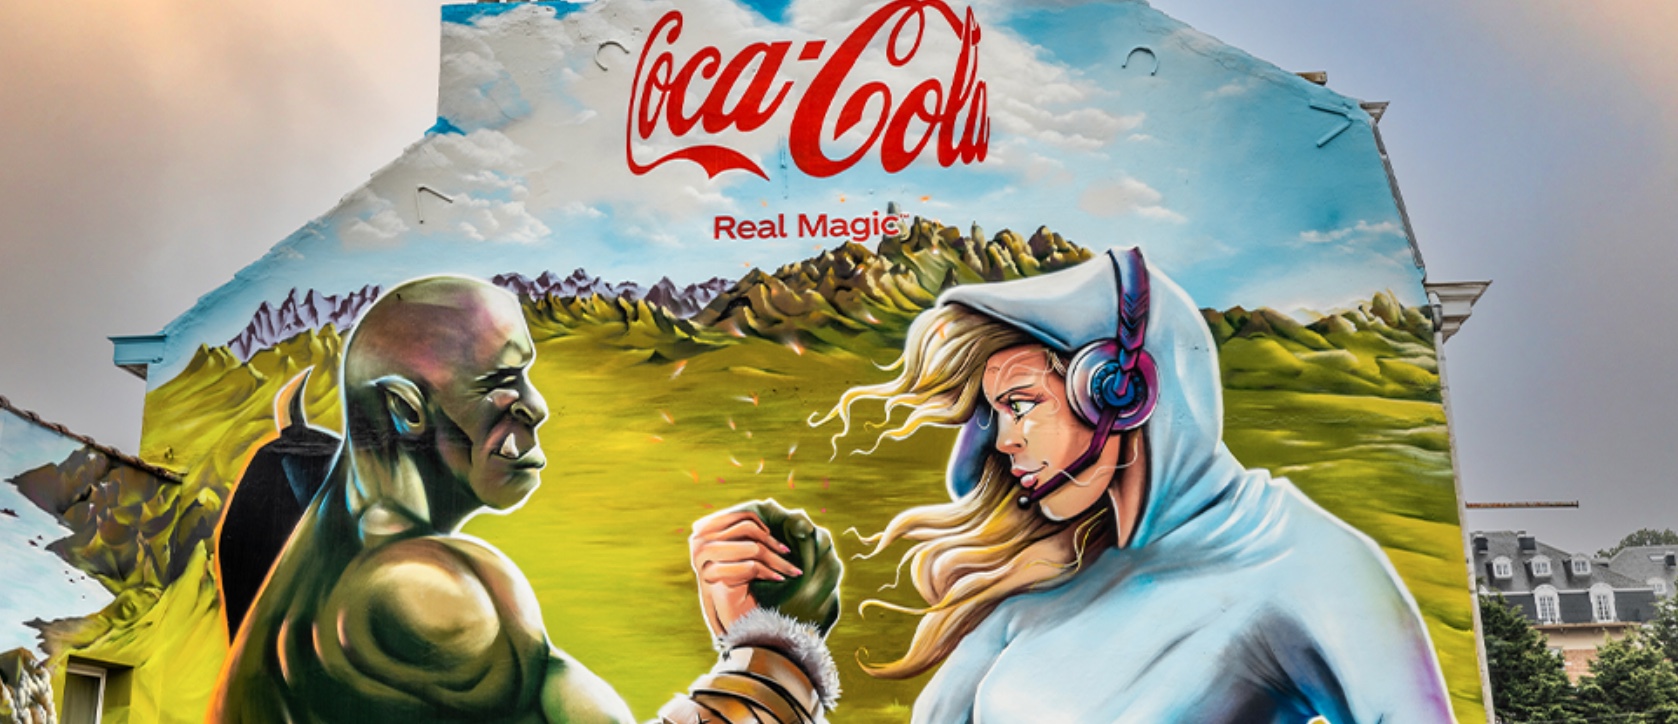 Coca-Cola startReal Magic merkplatform met street art